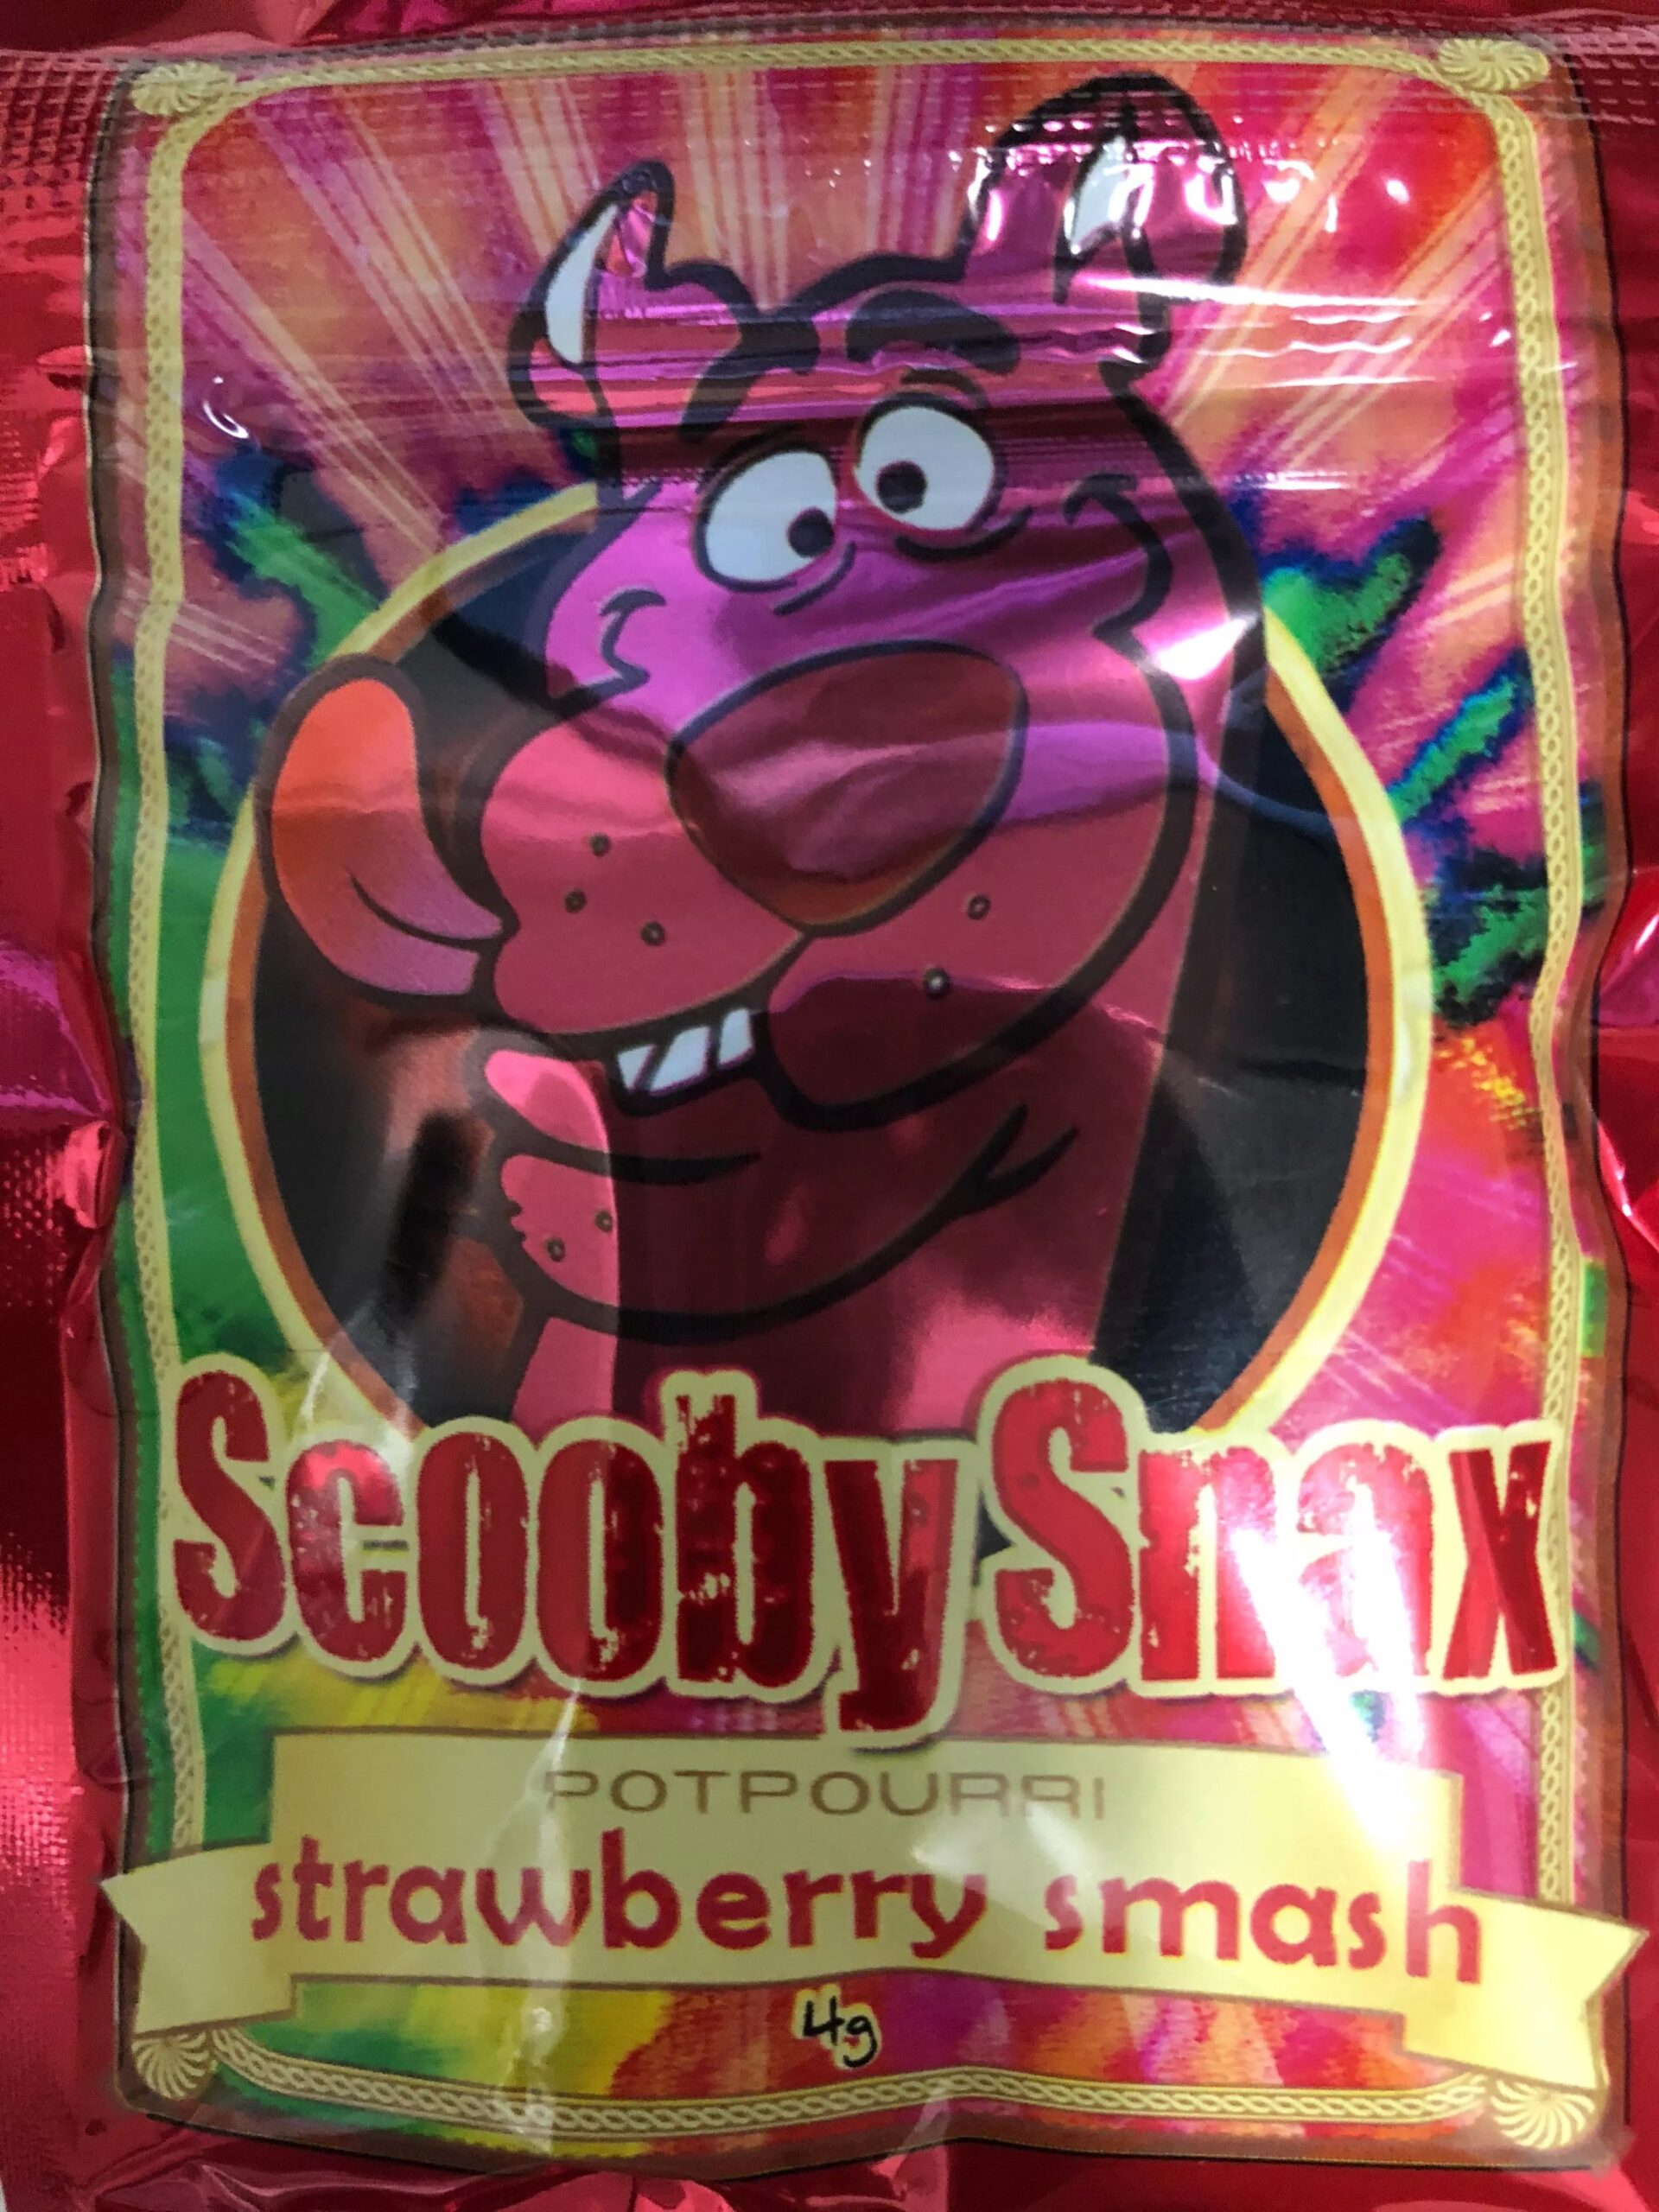 Buy Scooby Snax Spice